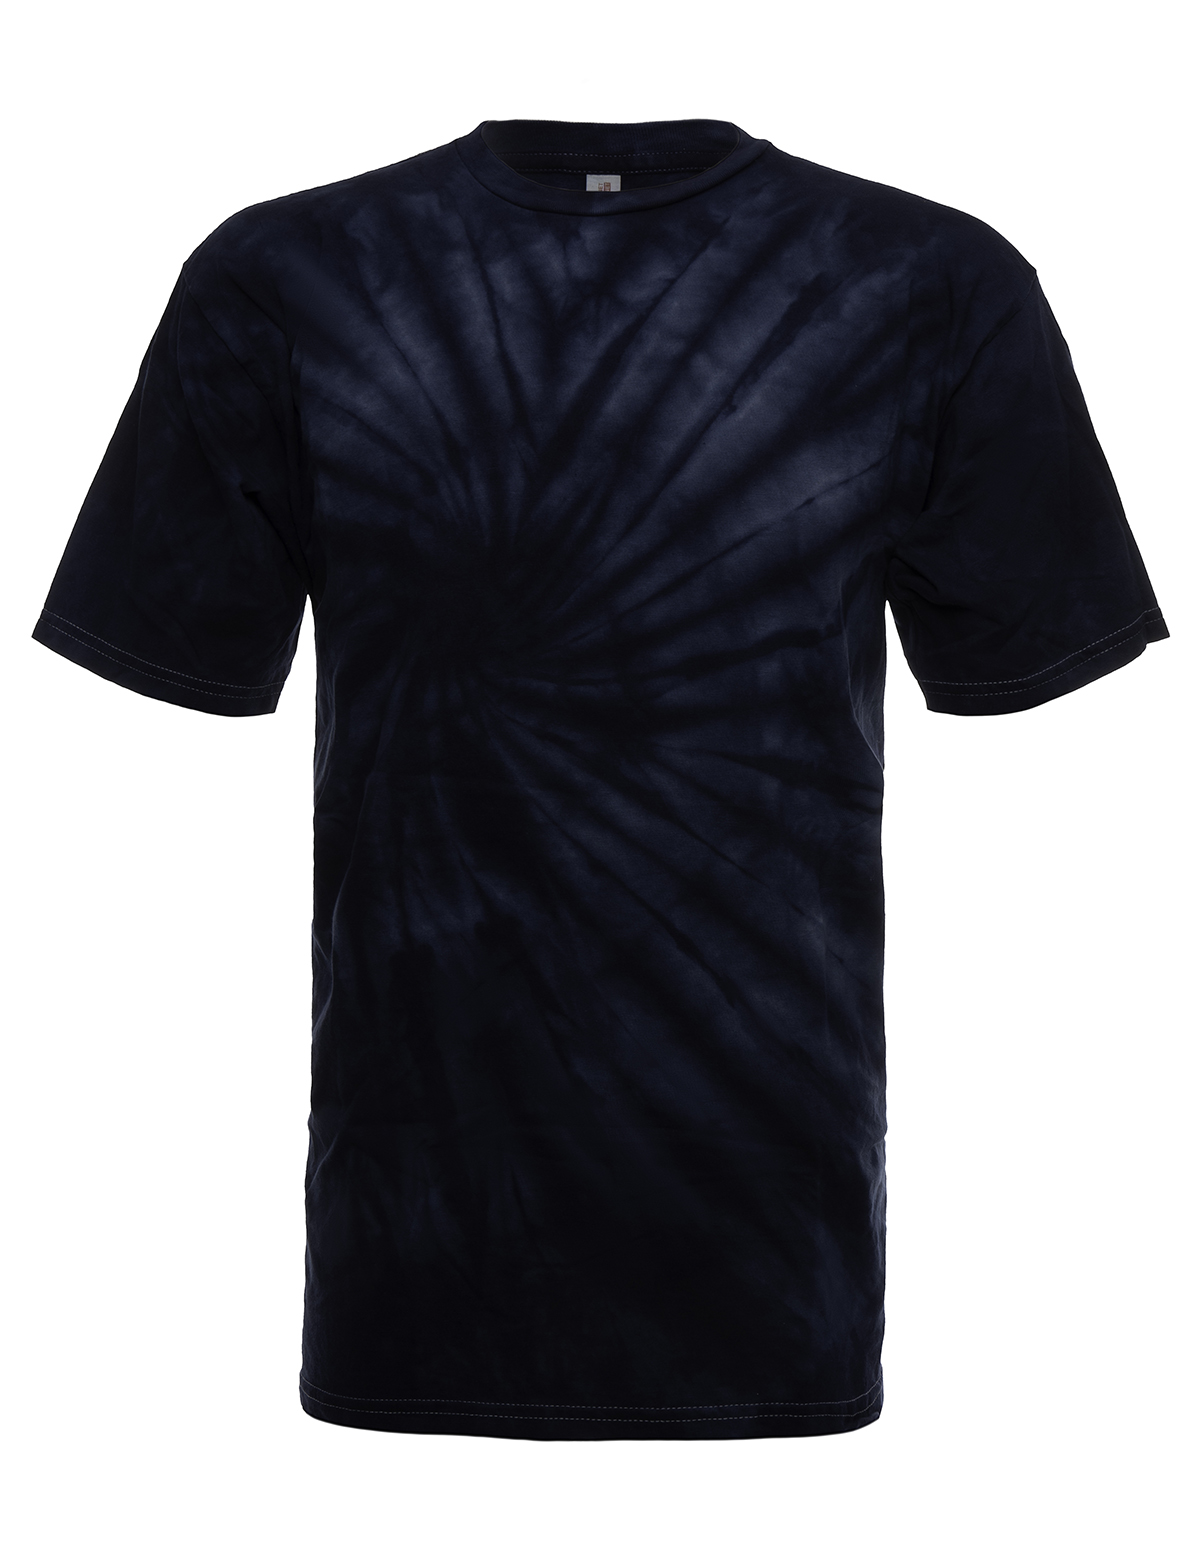 21 SPIRAL- Single Spiral Midnight Front T-shirt